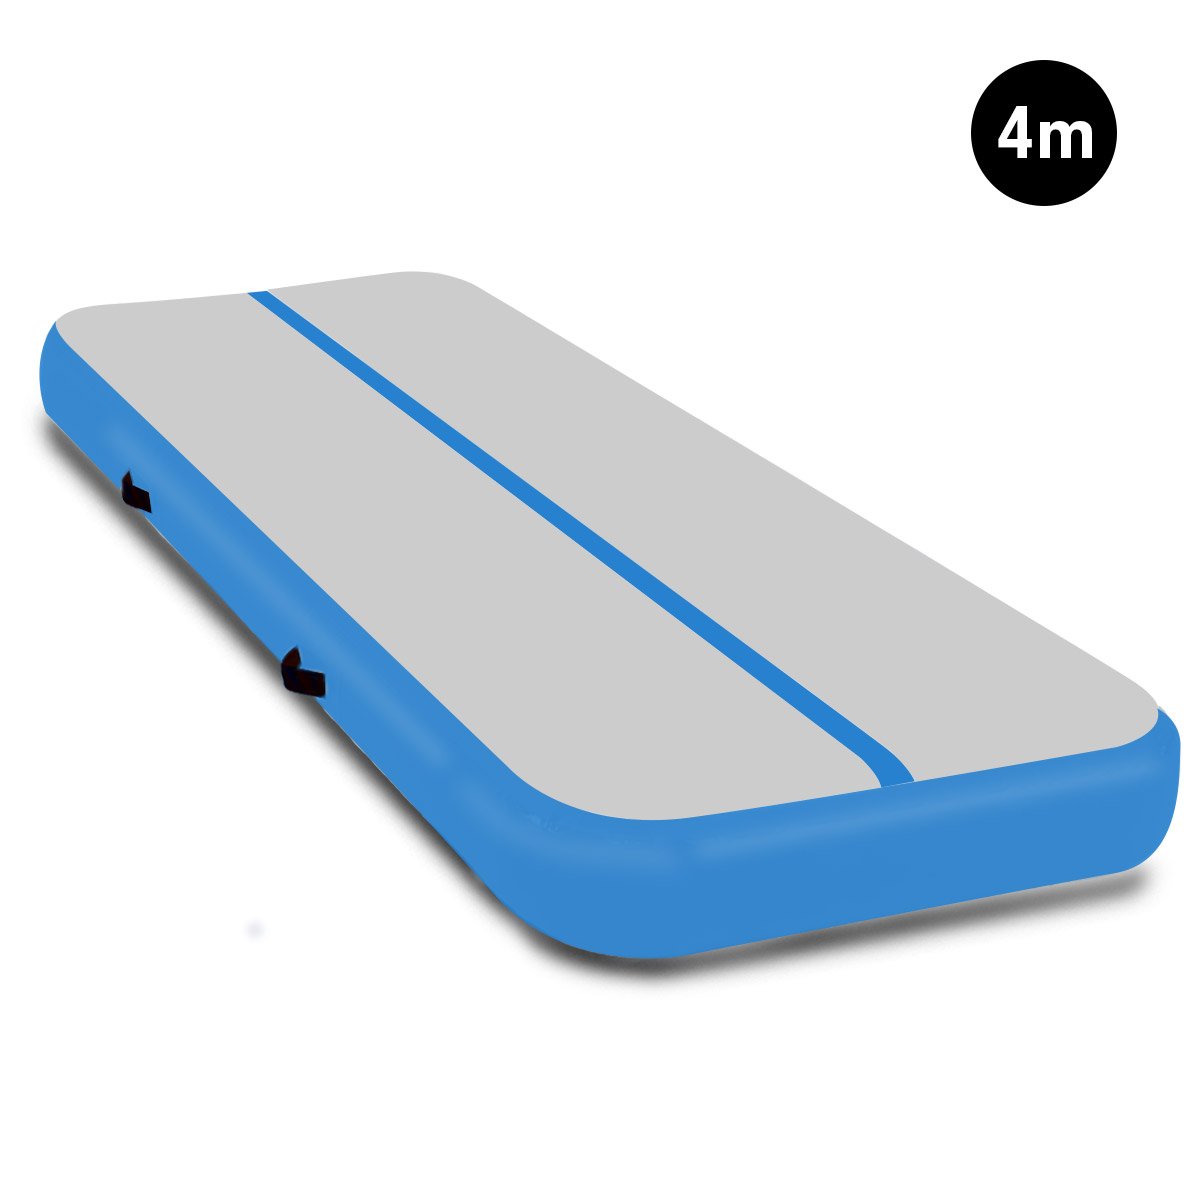 4m x 2m Air Track Gymnastics Mat Tumbling Exercise - Grey Blue 2